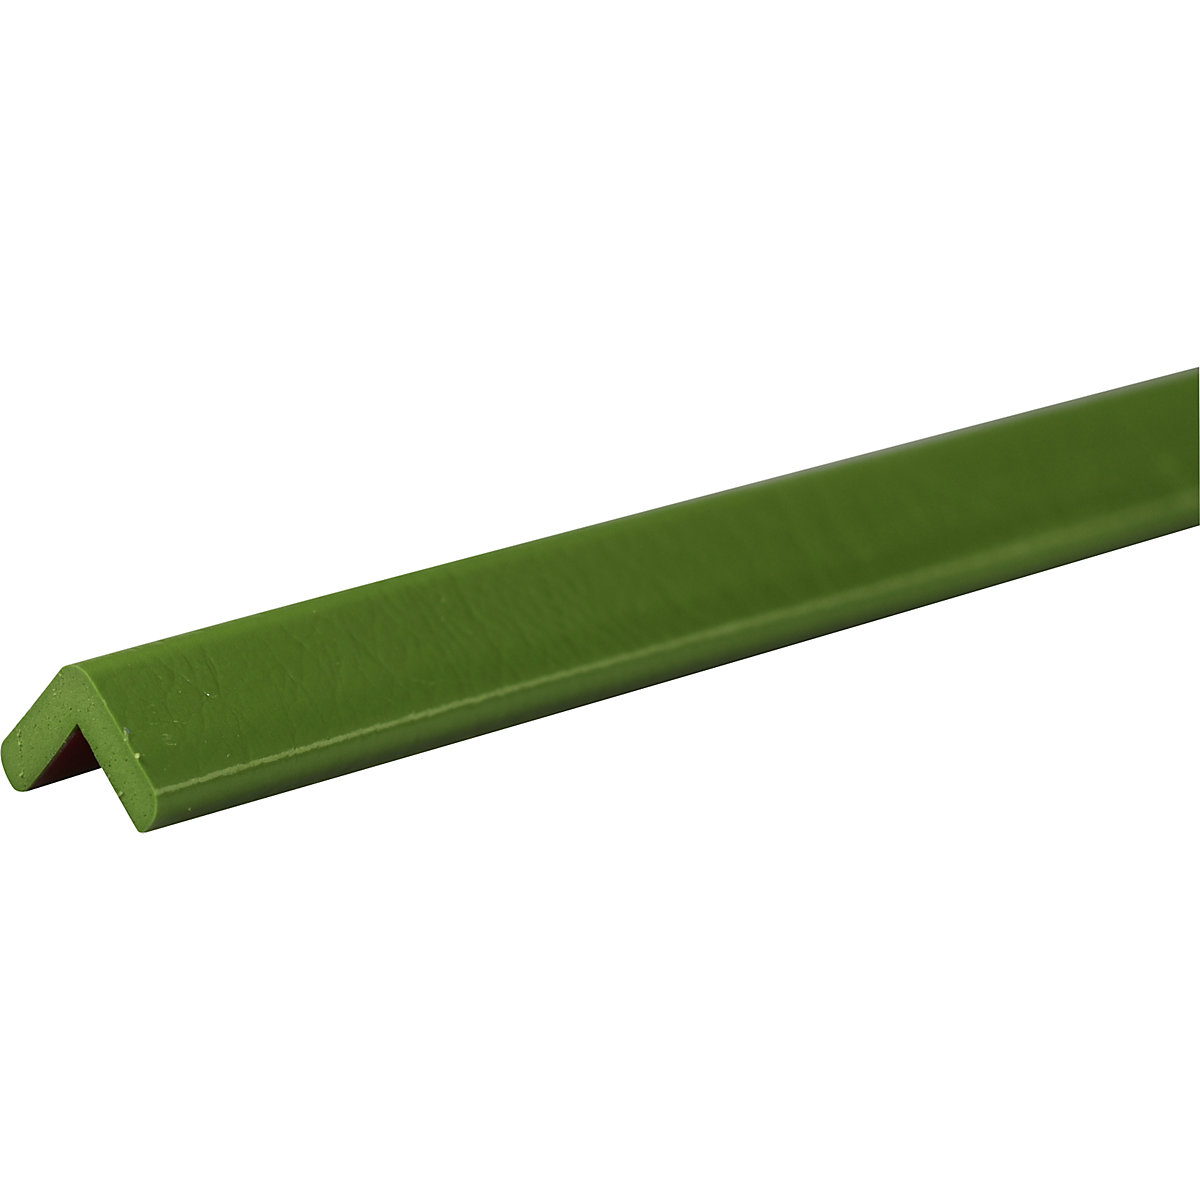 Knuffi® corner protection – SHG, type E, 1 m piece, green-31